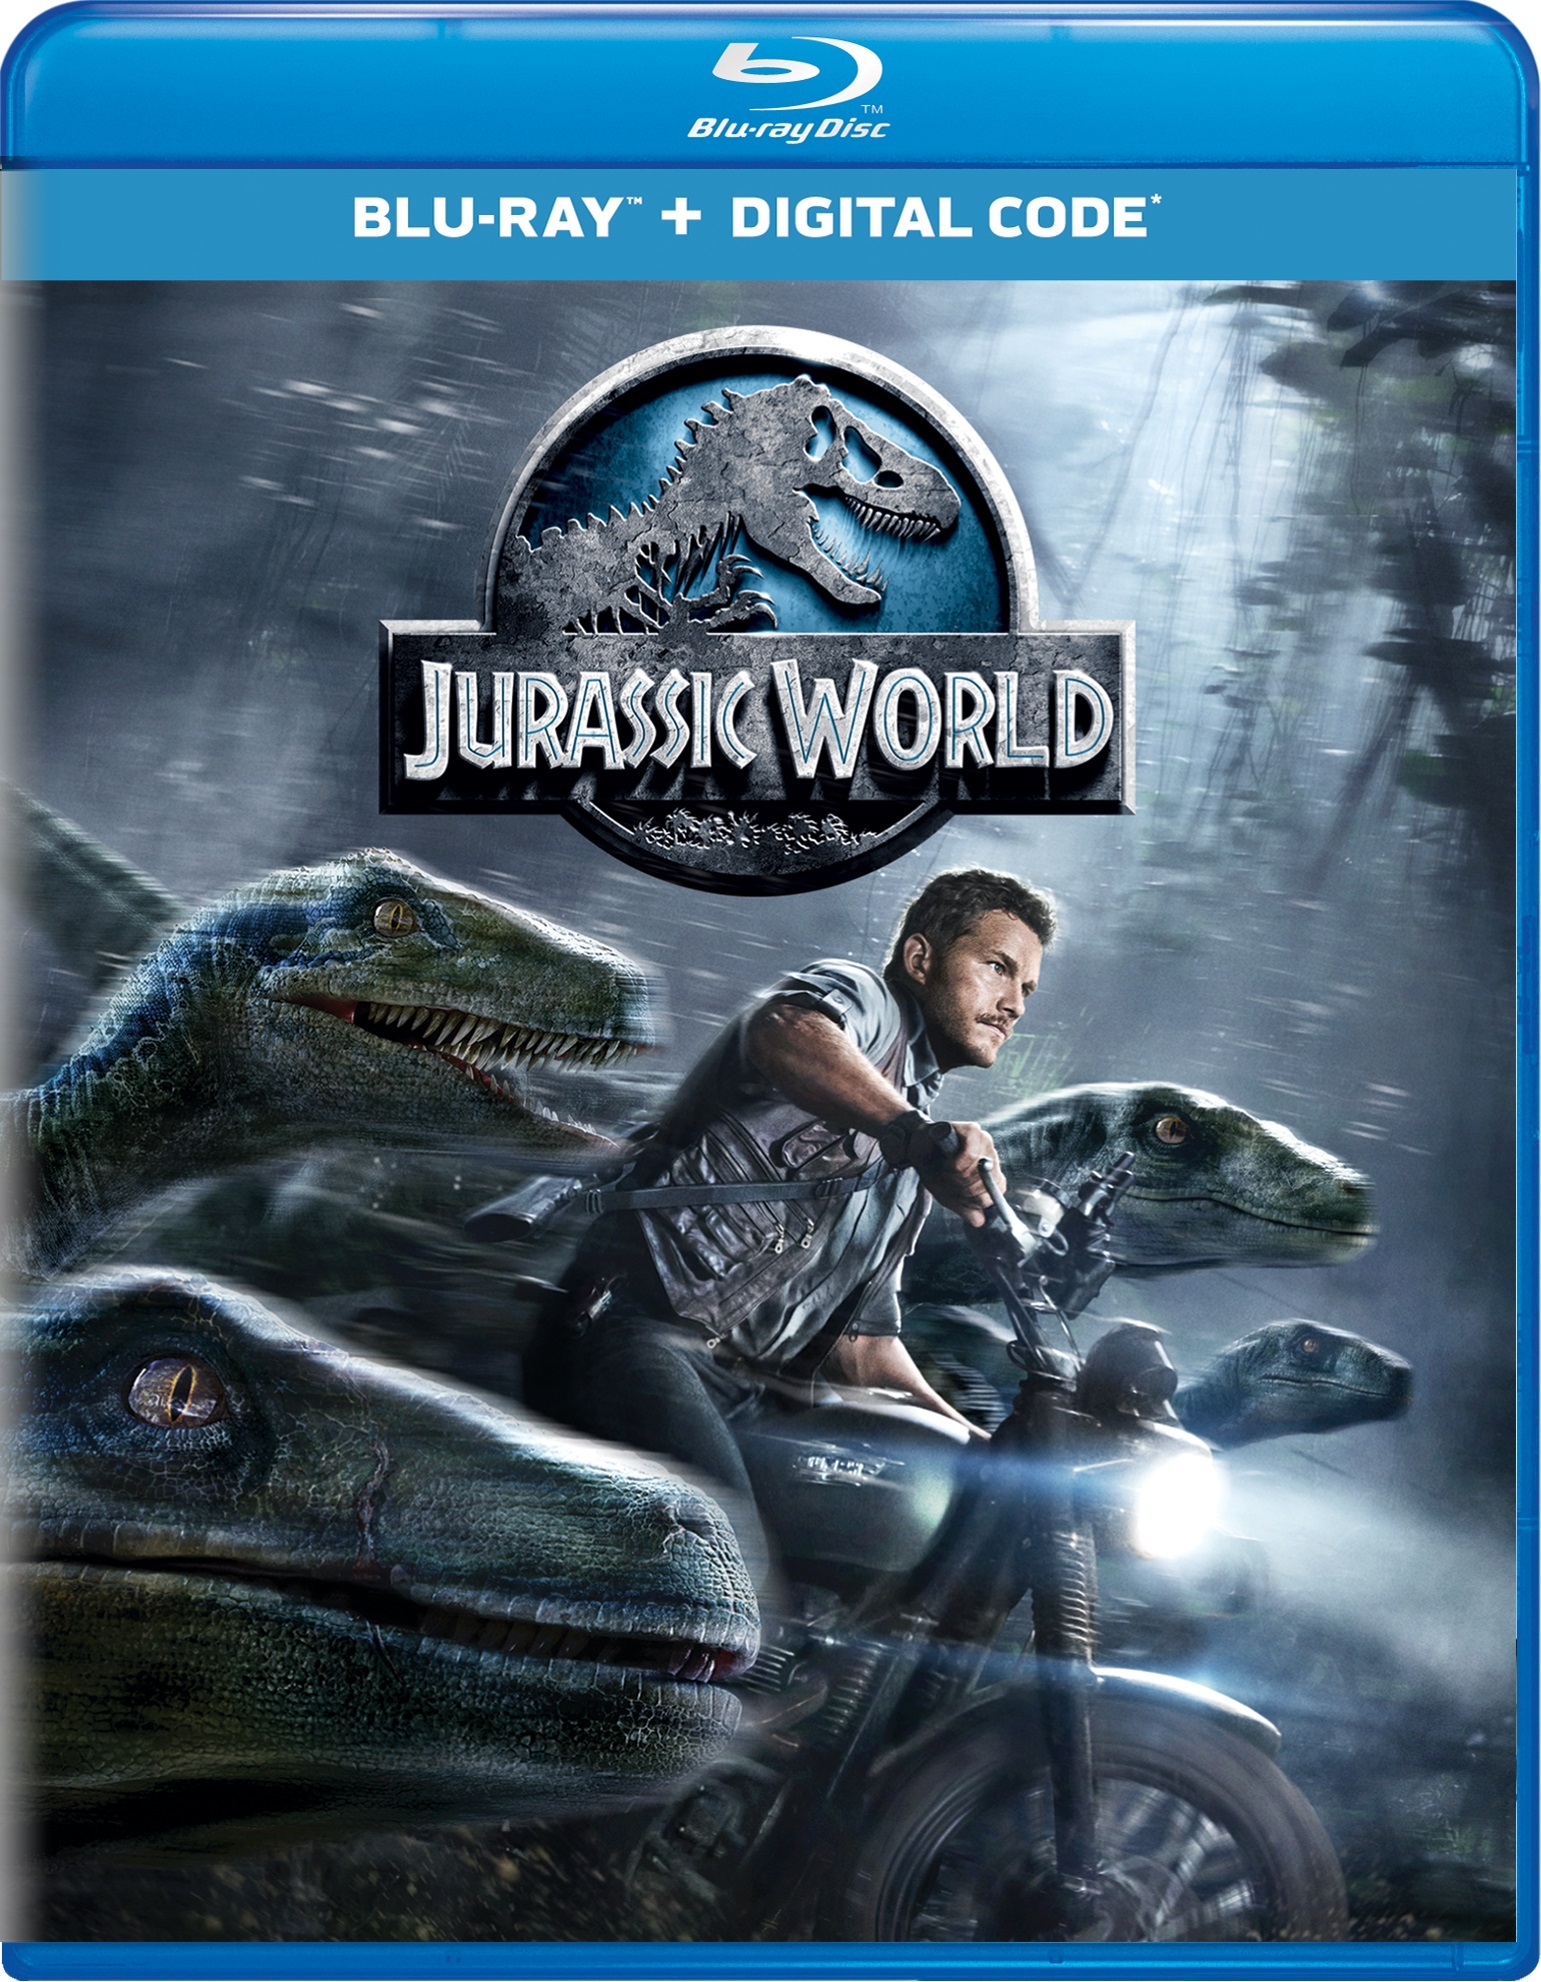 Jurassic World (Blu-ray + Digital Copy) - Blu-ray [ 2015 ]  - Adventure Movies On Blu-ray - Movies On GRUV